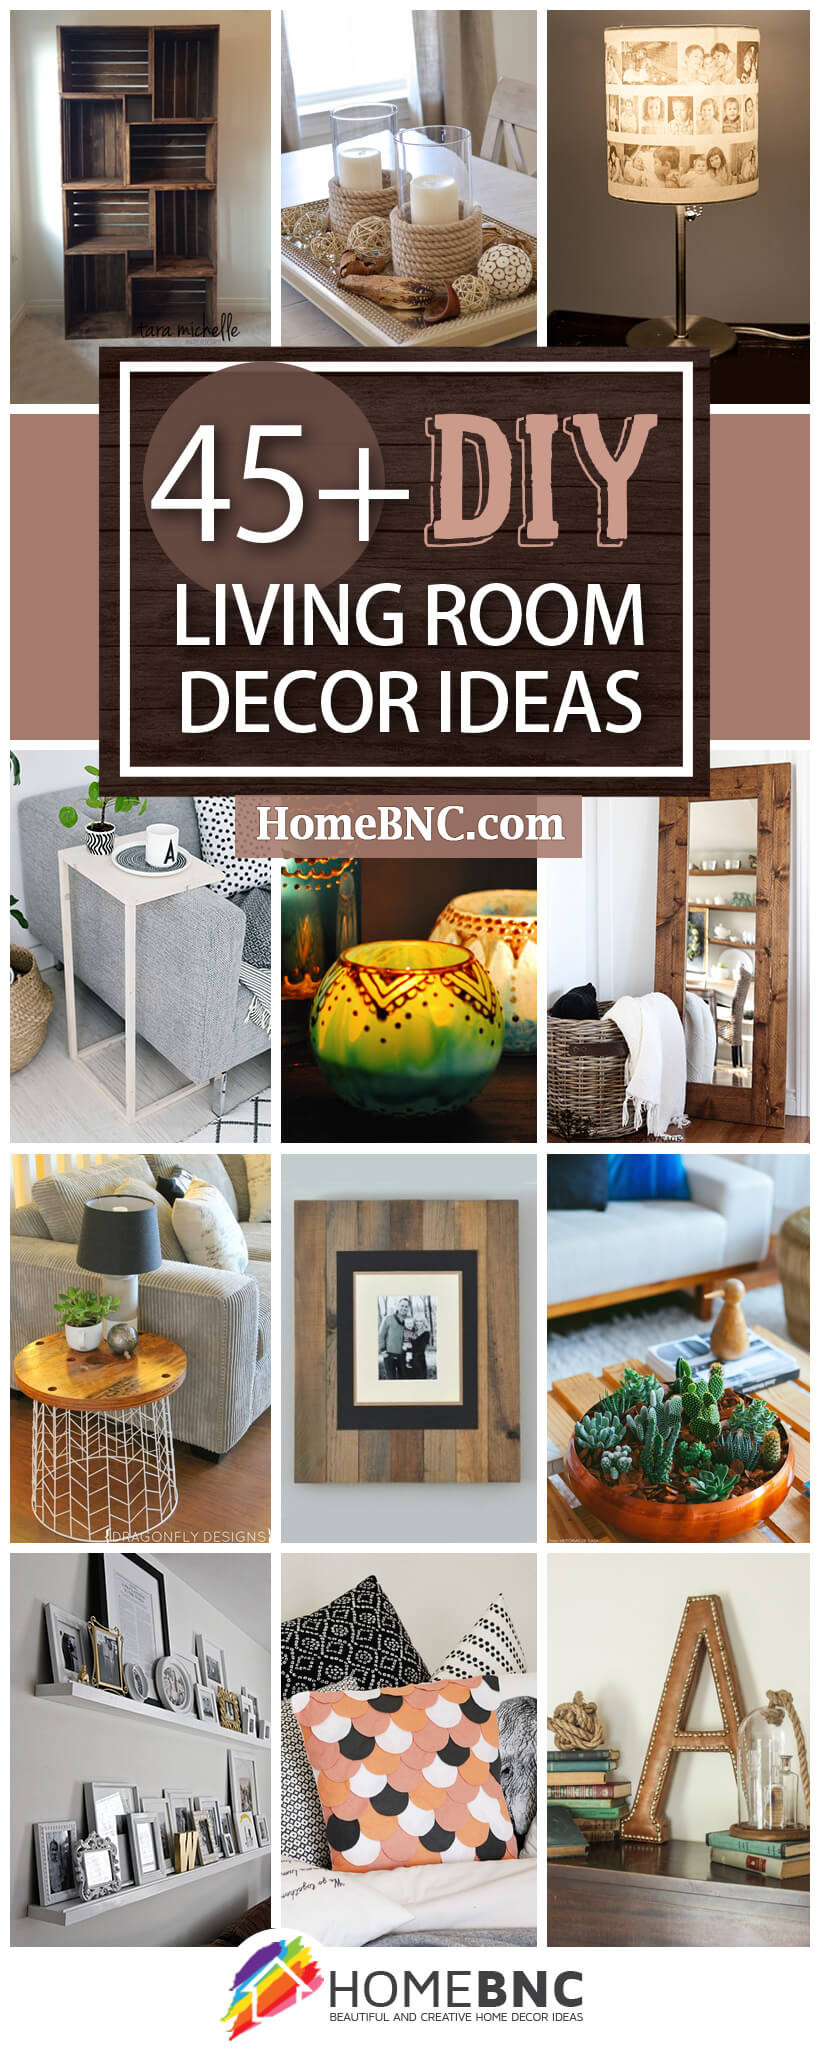 DIY Home Decor Ideas Living Room
 45 Best DIY Living Room Decorating Ideas and Designs for 2019